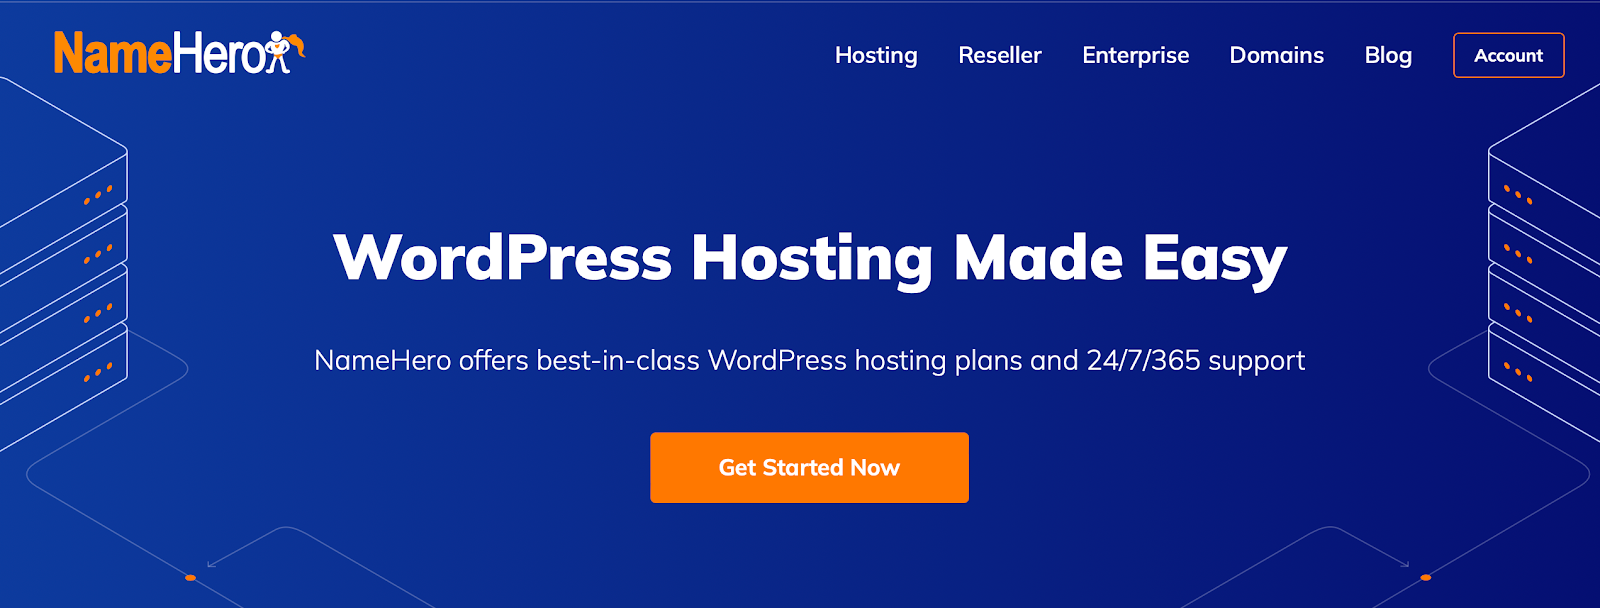 NameHero provides web hosting.